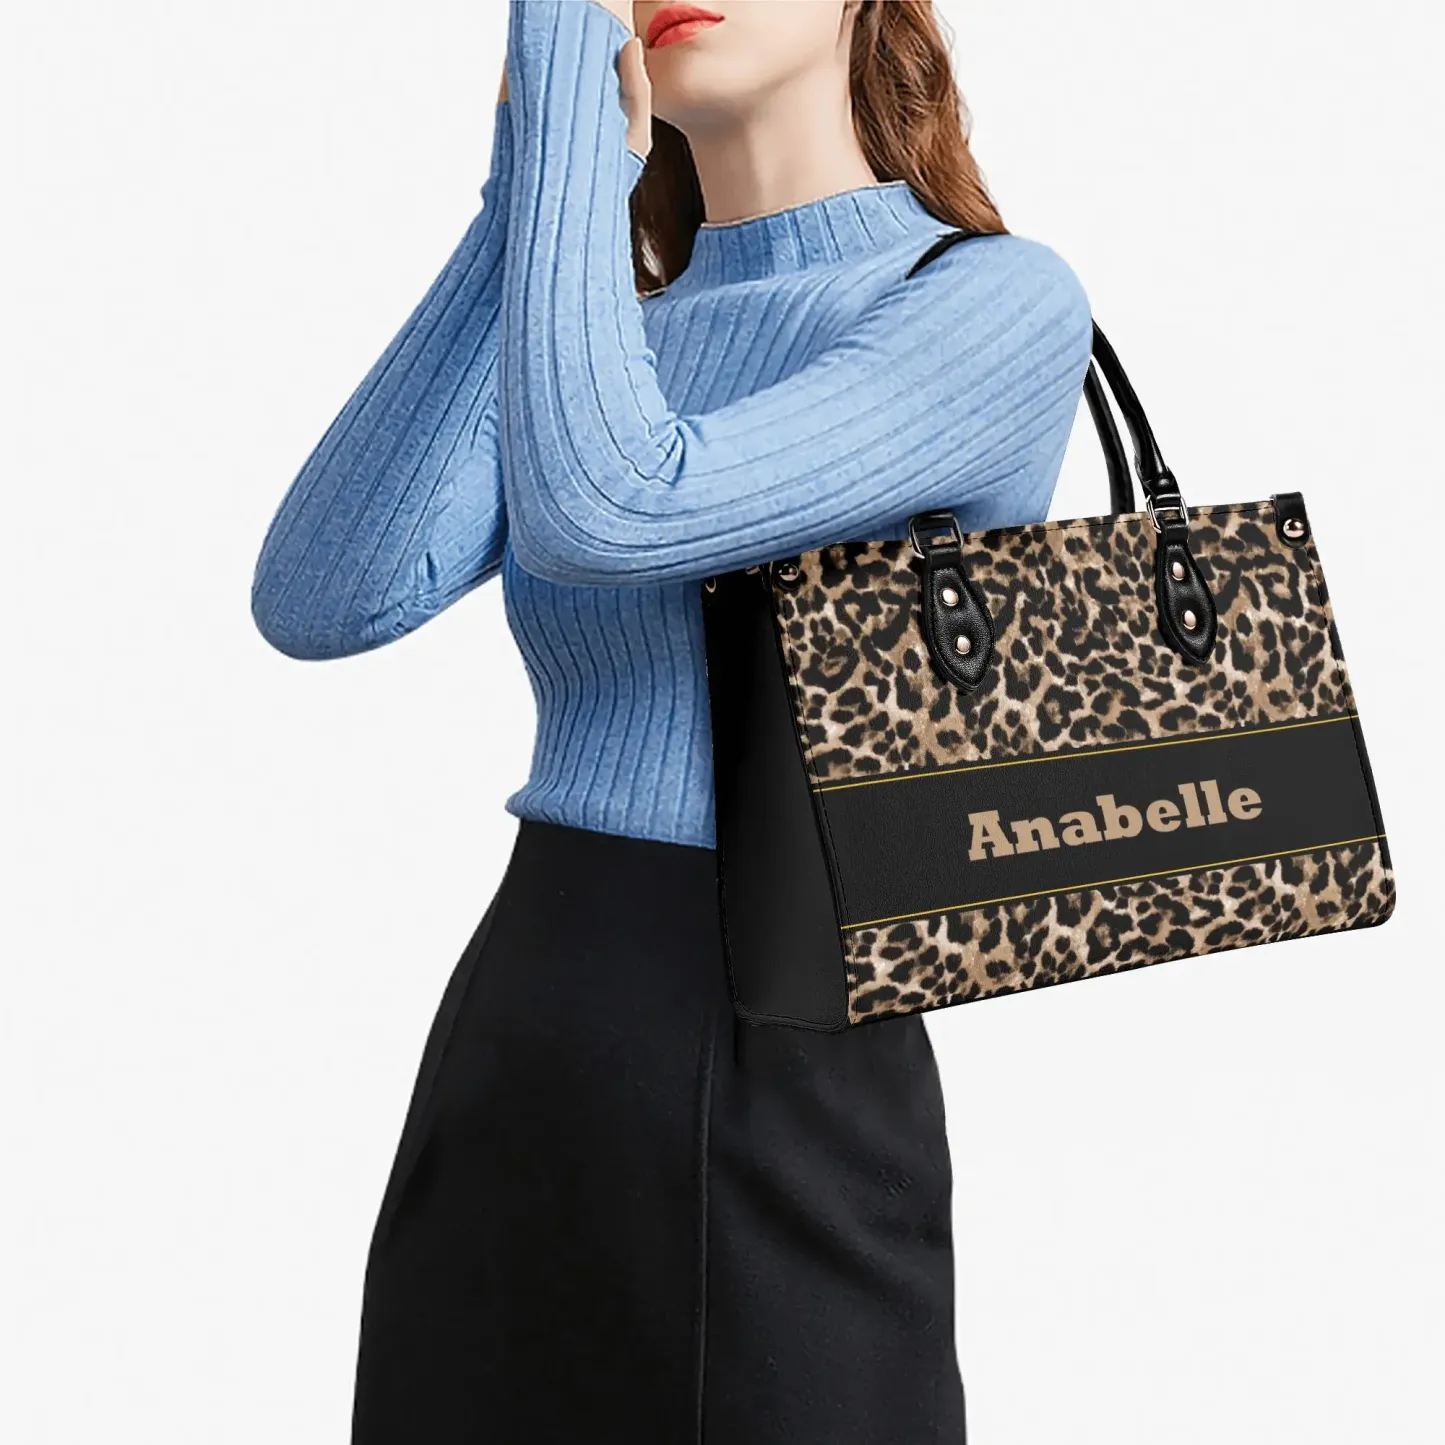 Personalized Leather Handbag Leopard